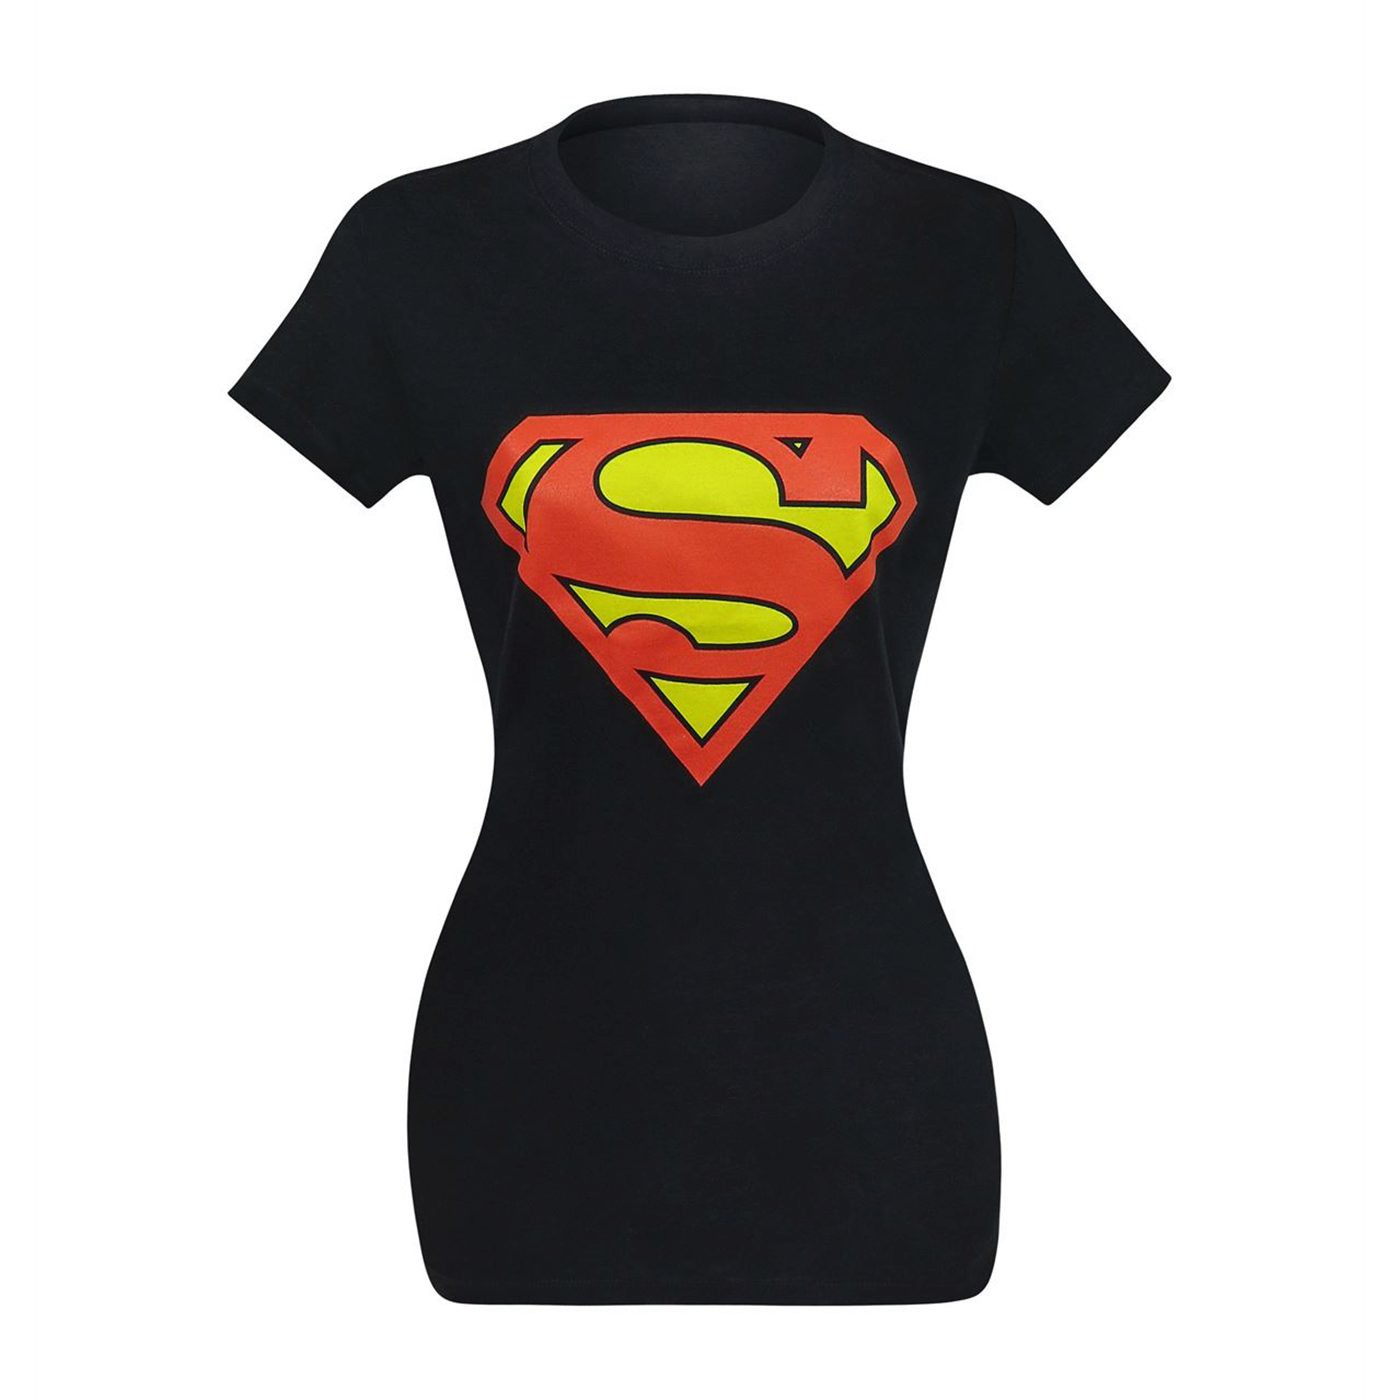 Superman Symbol Women's Black T-Shirt